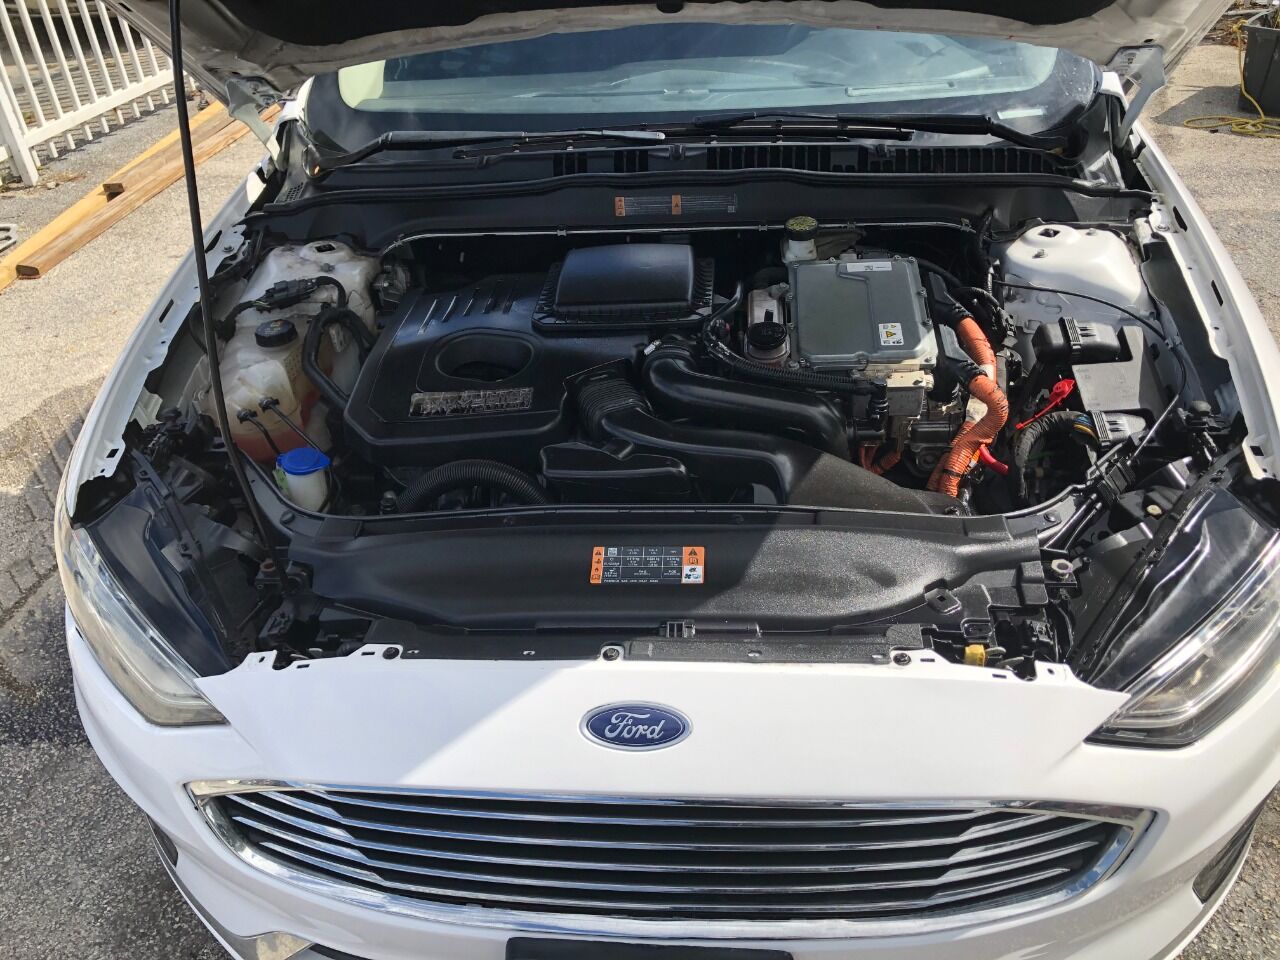 2019 Ford Fusion Sedan - $15,500